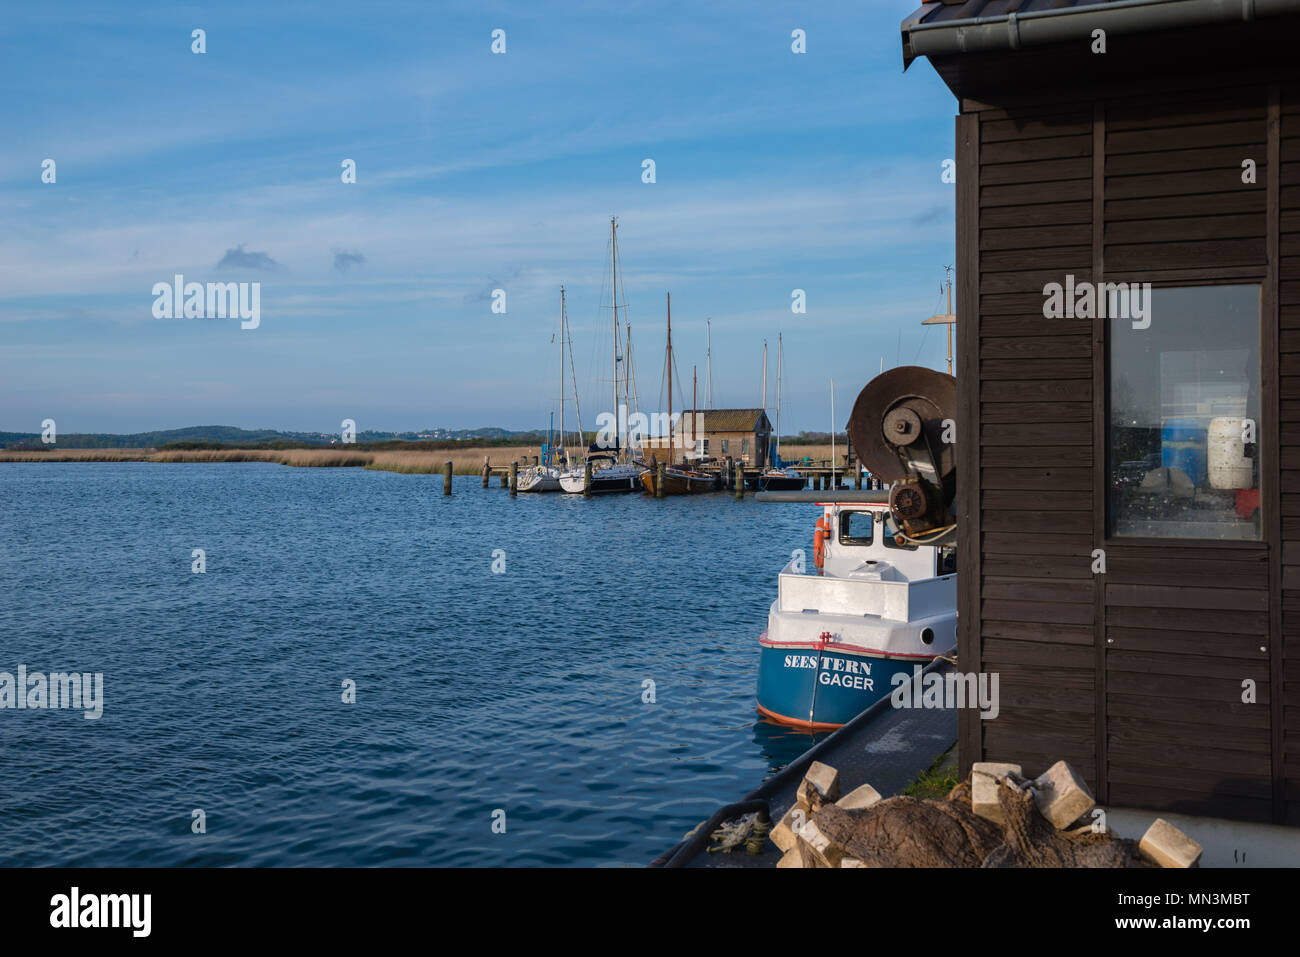 Habour scene of Gager, island of Rügen, Baltic Sea, Mecklenburg-West Pomerania, Germany Stock Photo